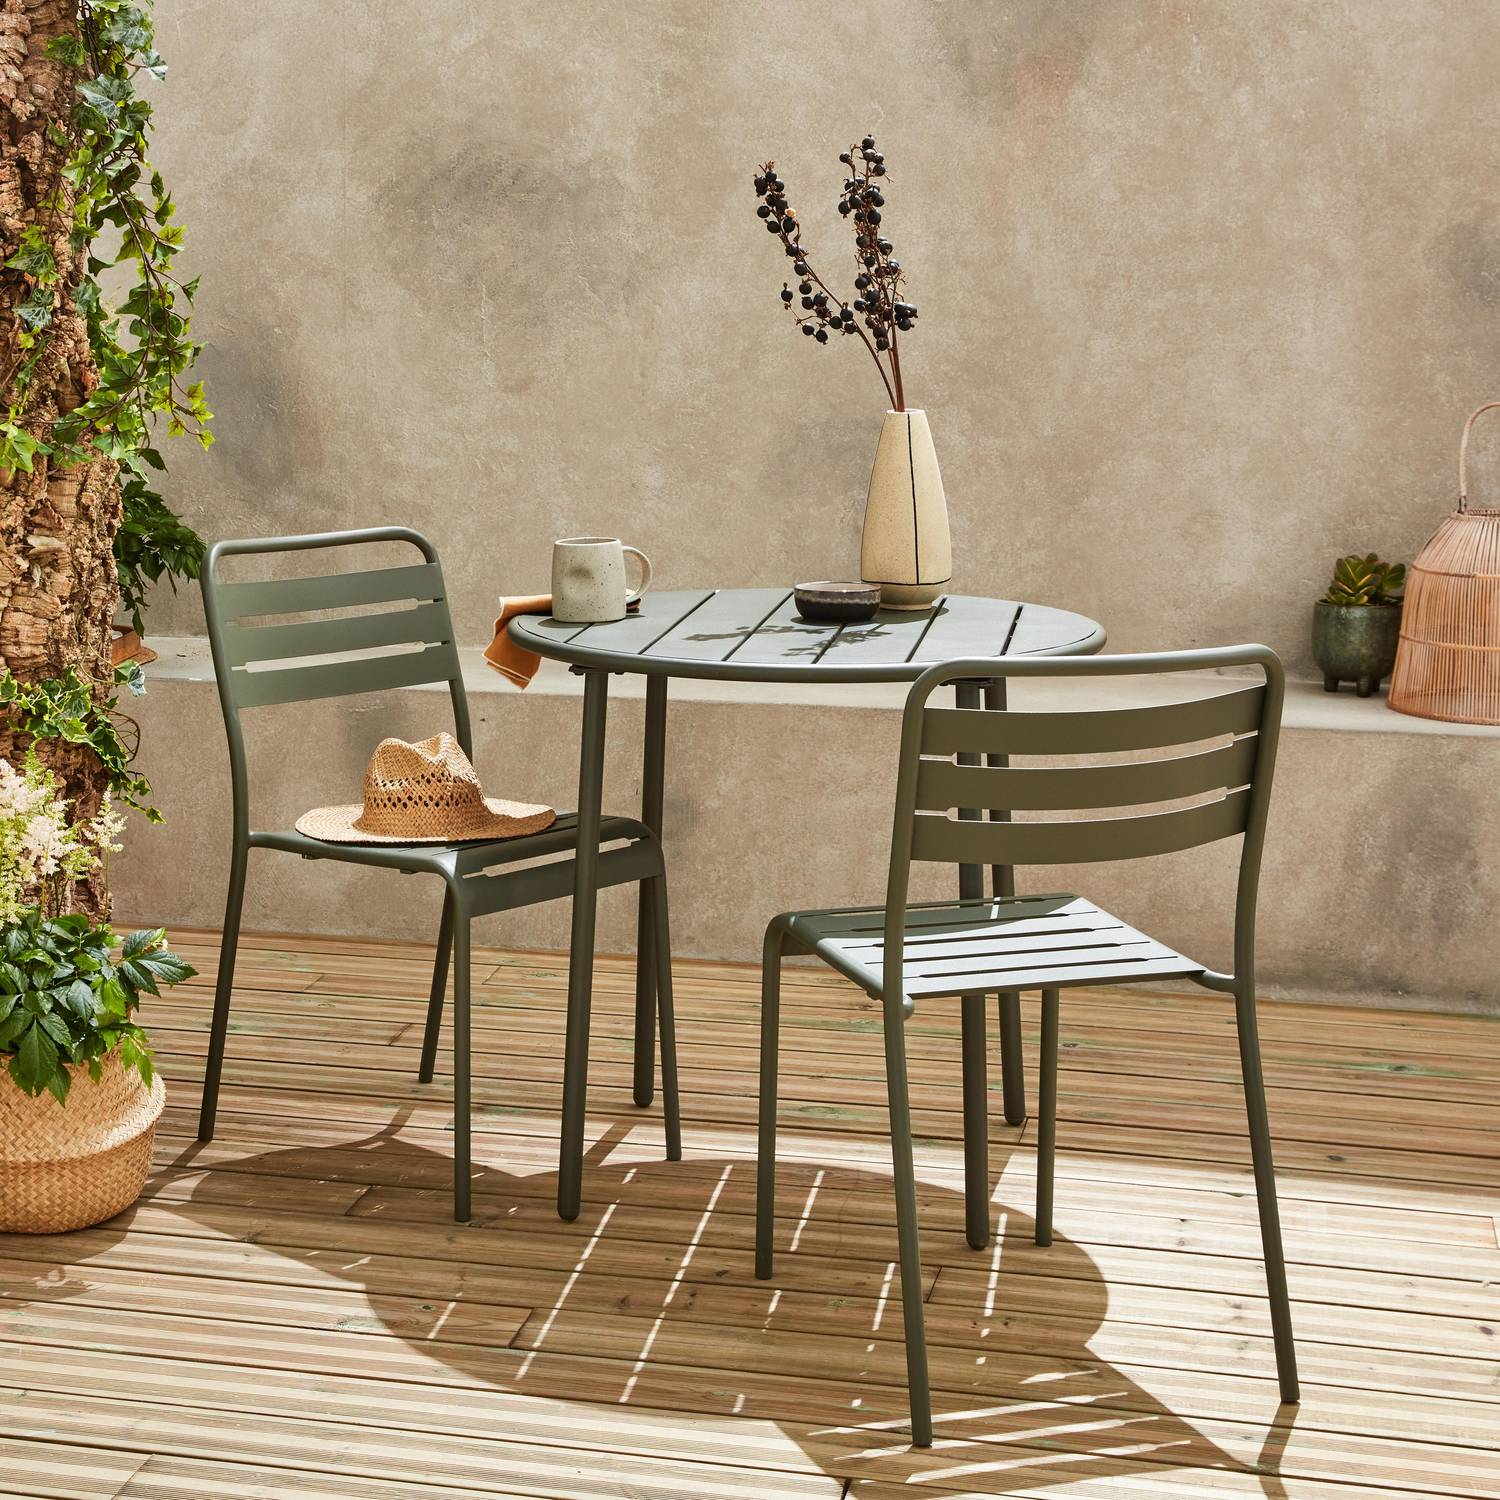 Amélia savane metalen tuintafel met 2 stoelen, roestbestendige afwerking Photo1